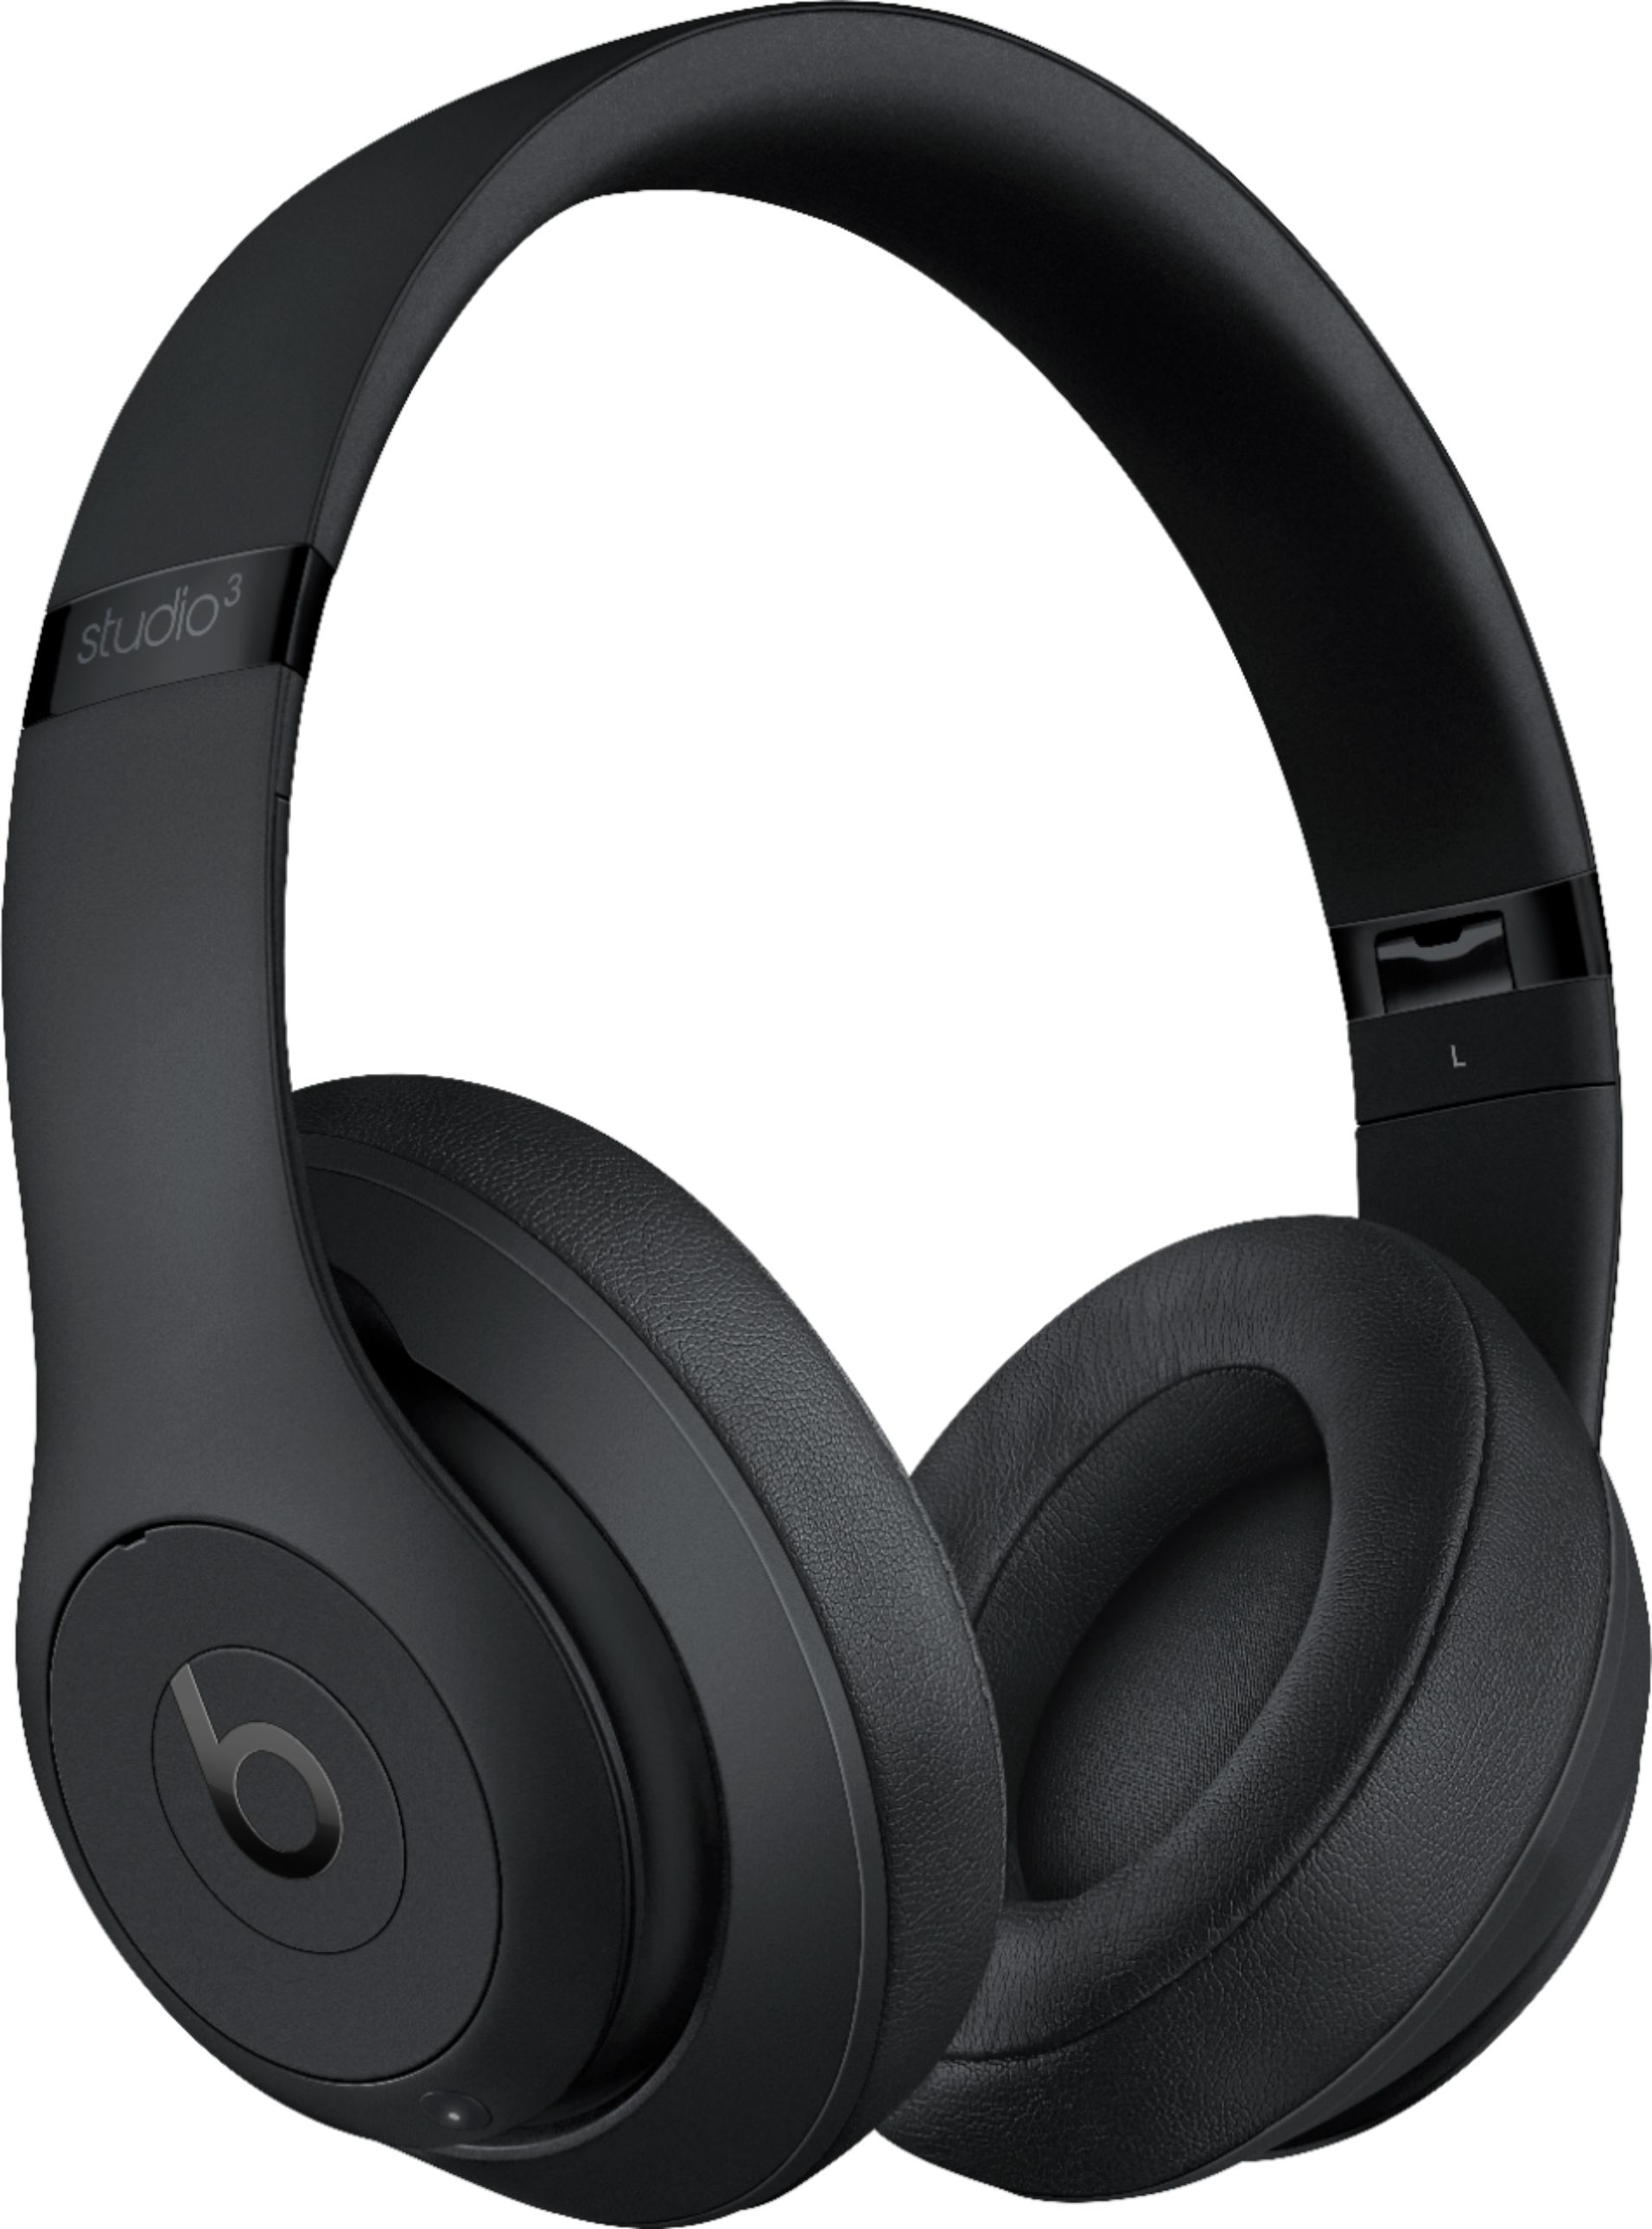 Beats Studio3 Wireless Bluetooth Headphones